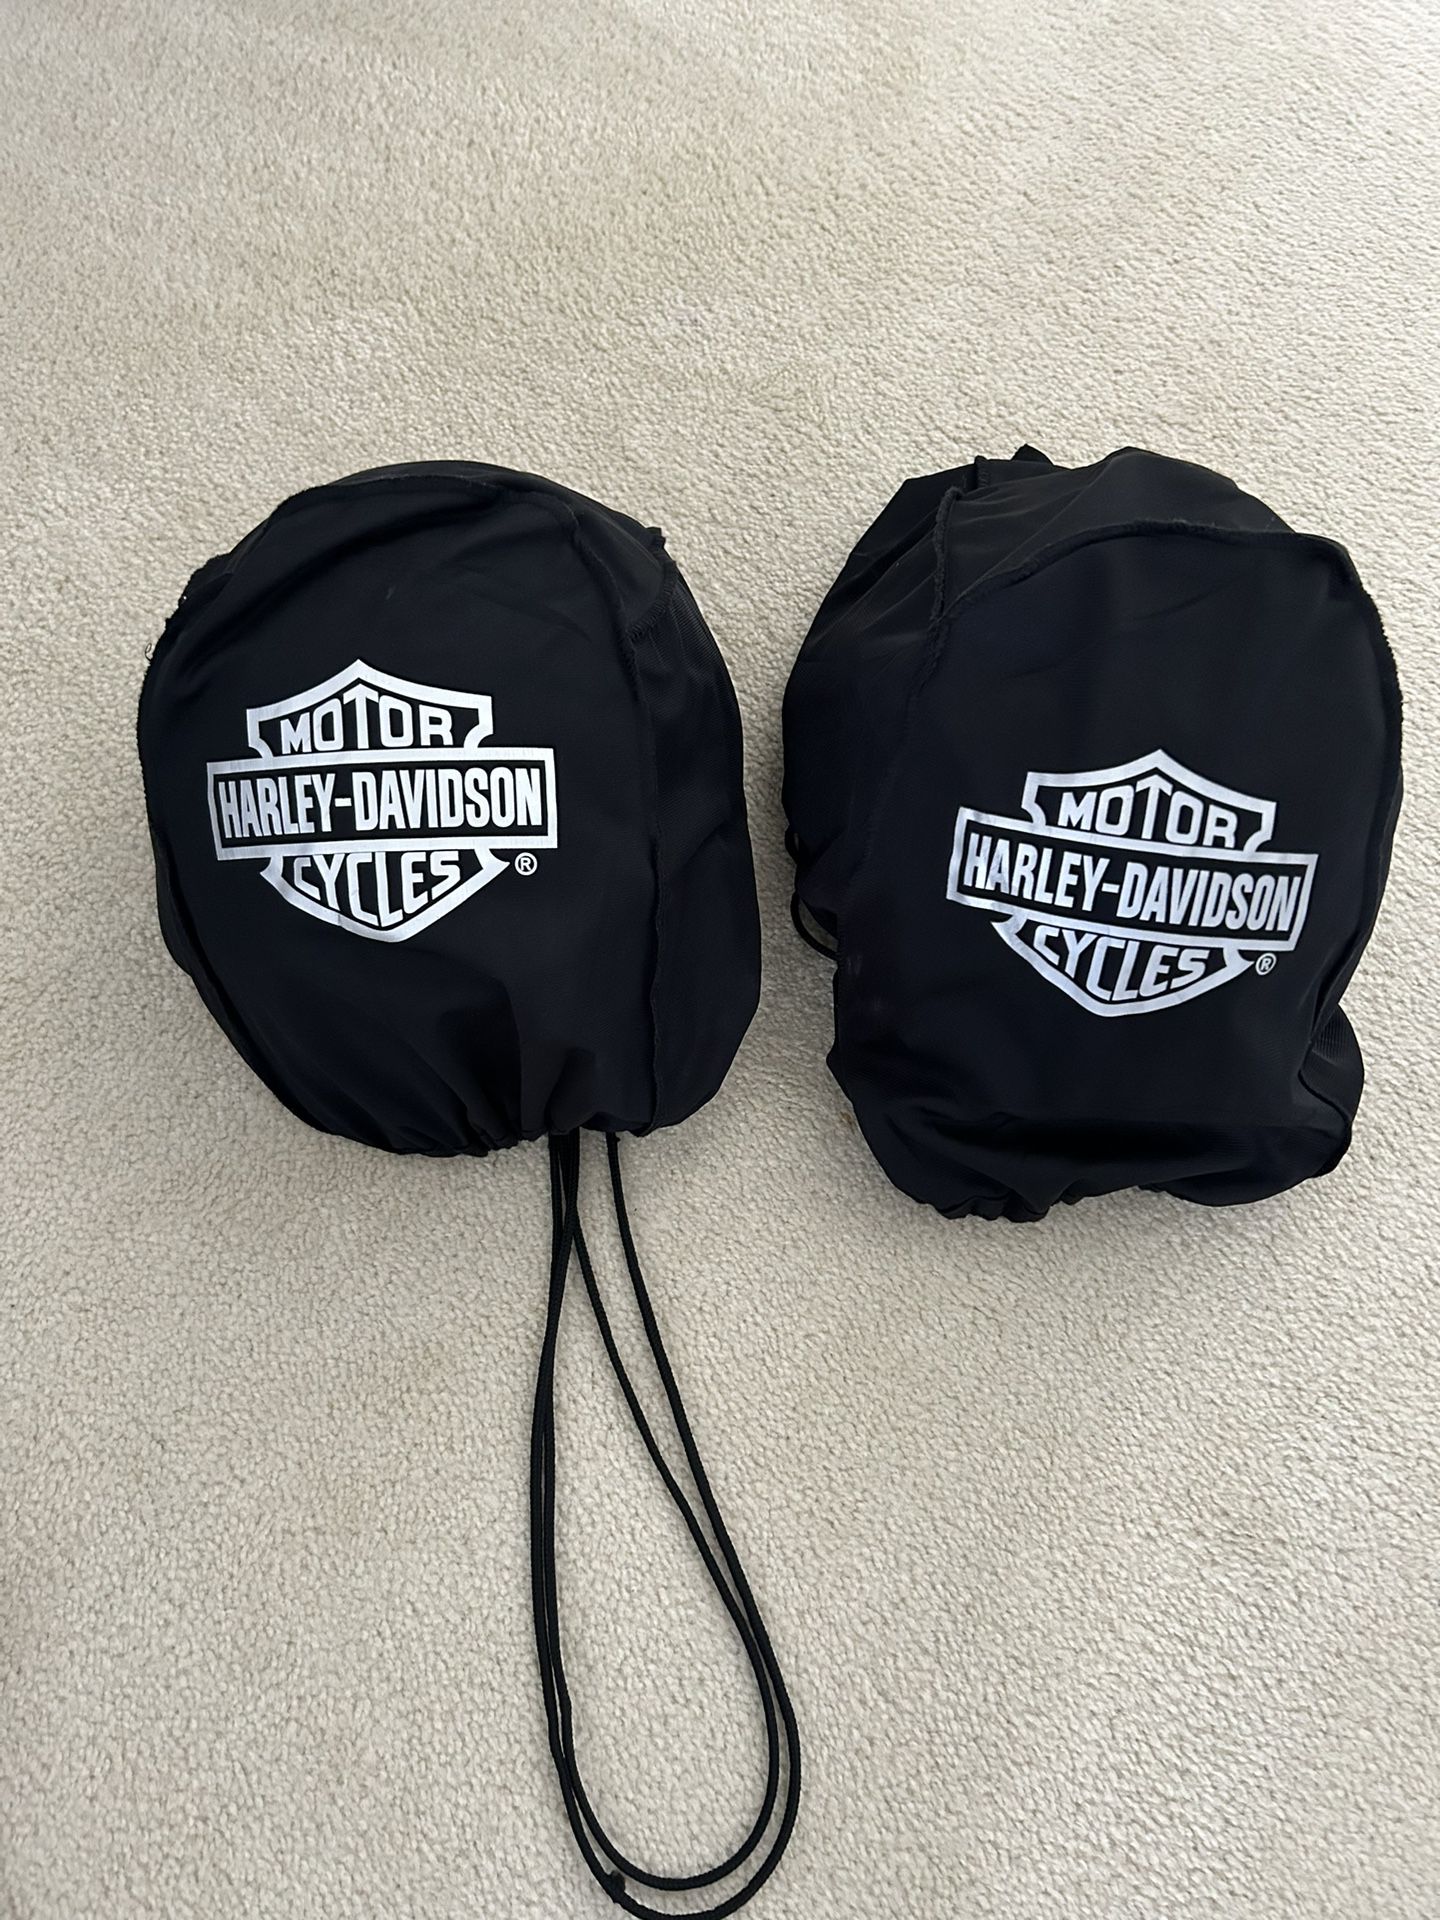 Harley Motor Cycle Helmets With Bags